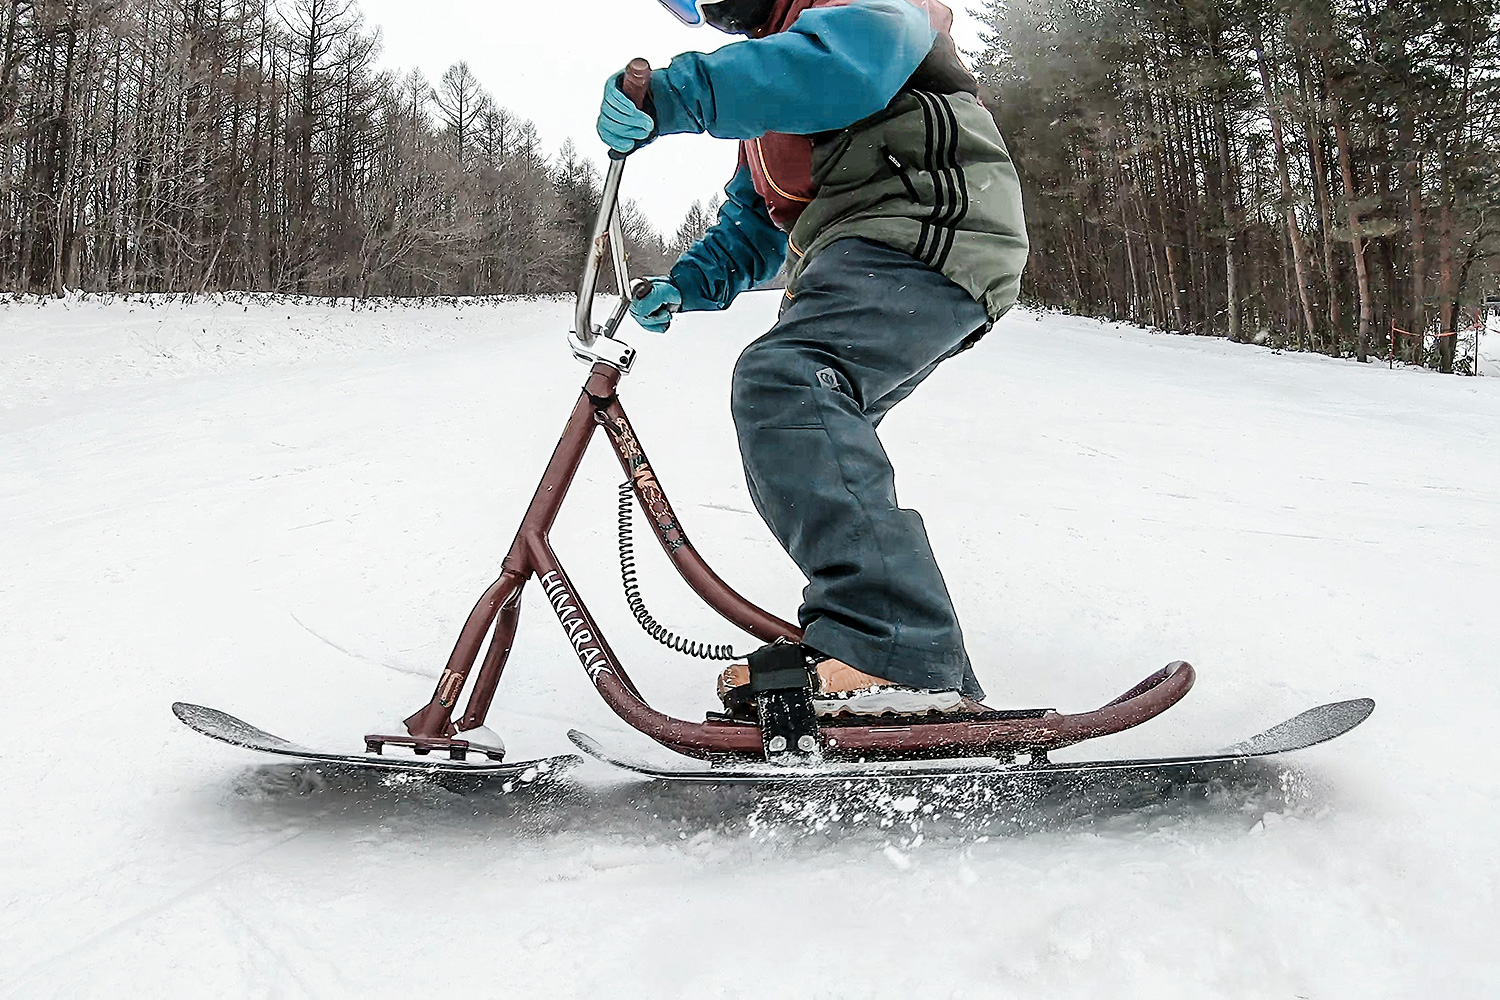 Jykk How To Snowscoot 2 初心者向けスノースクートの滑り方 Jykk公式how To ムービー Magazine Snowscoot スノースクート Official ジック ジャパン株式会社